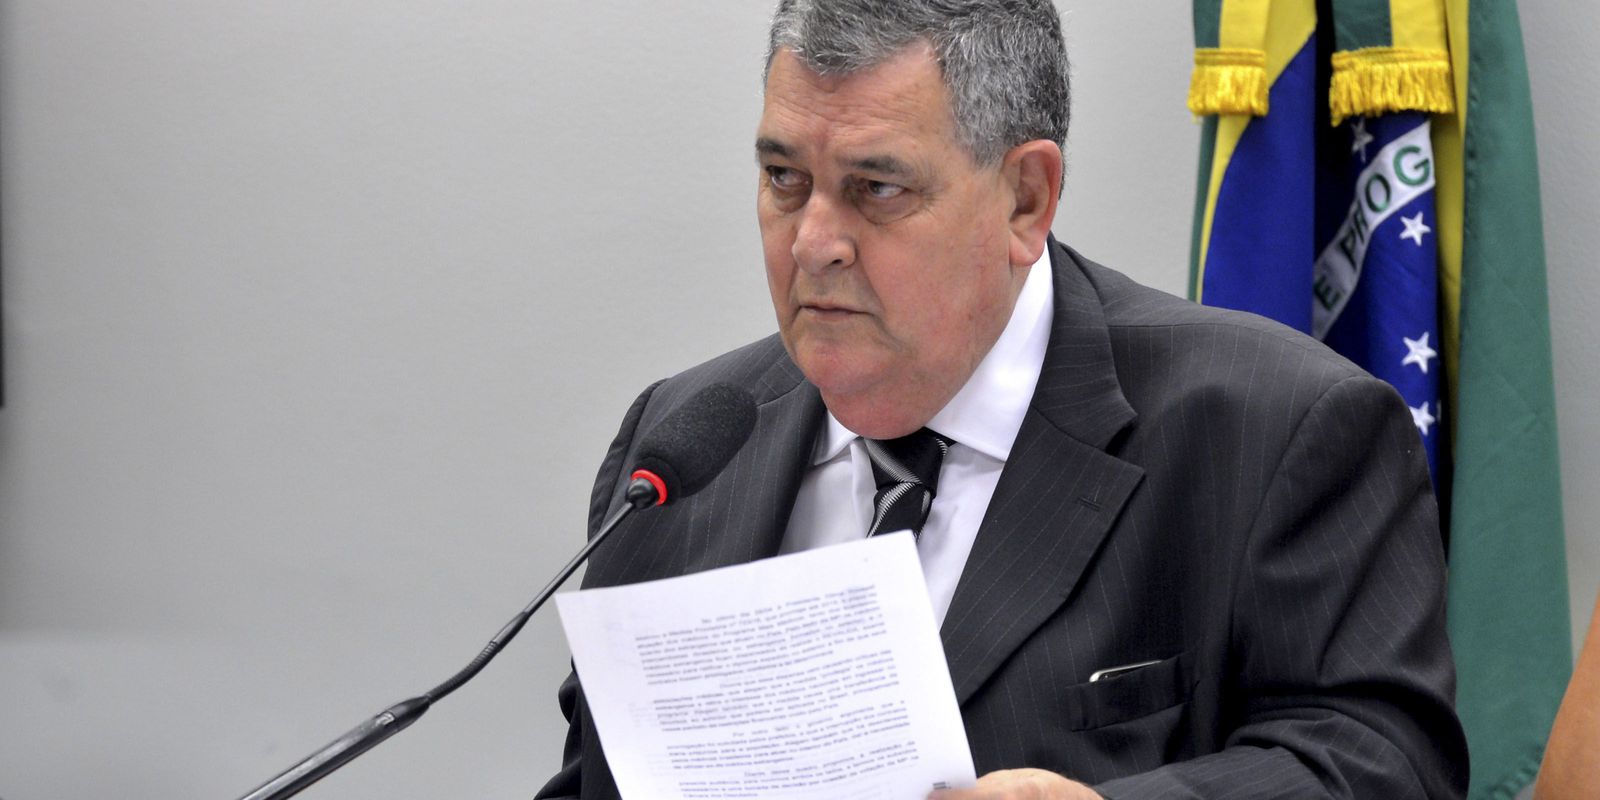 São Paulo councilor Arnaldo Faria de Sá dies at 76